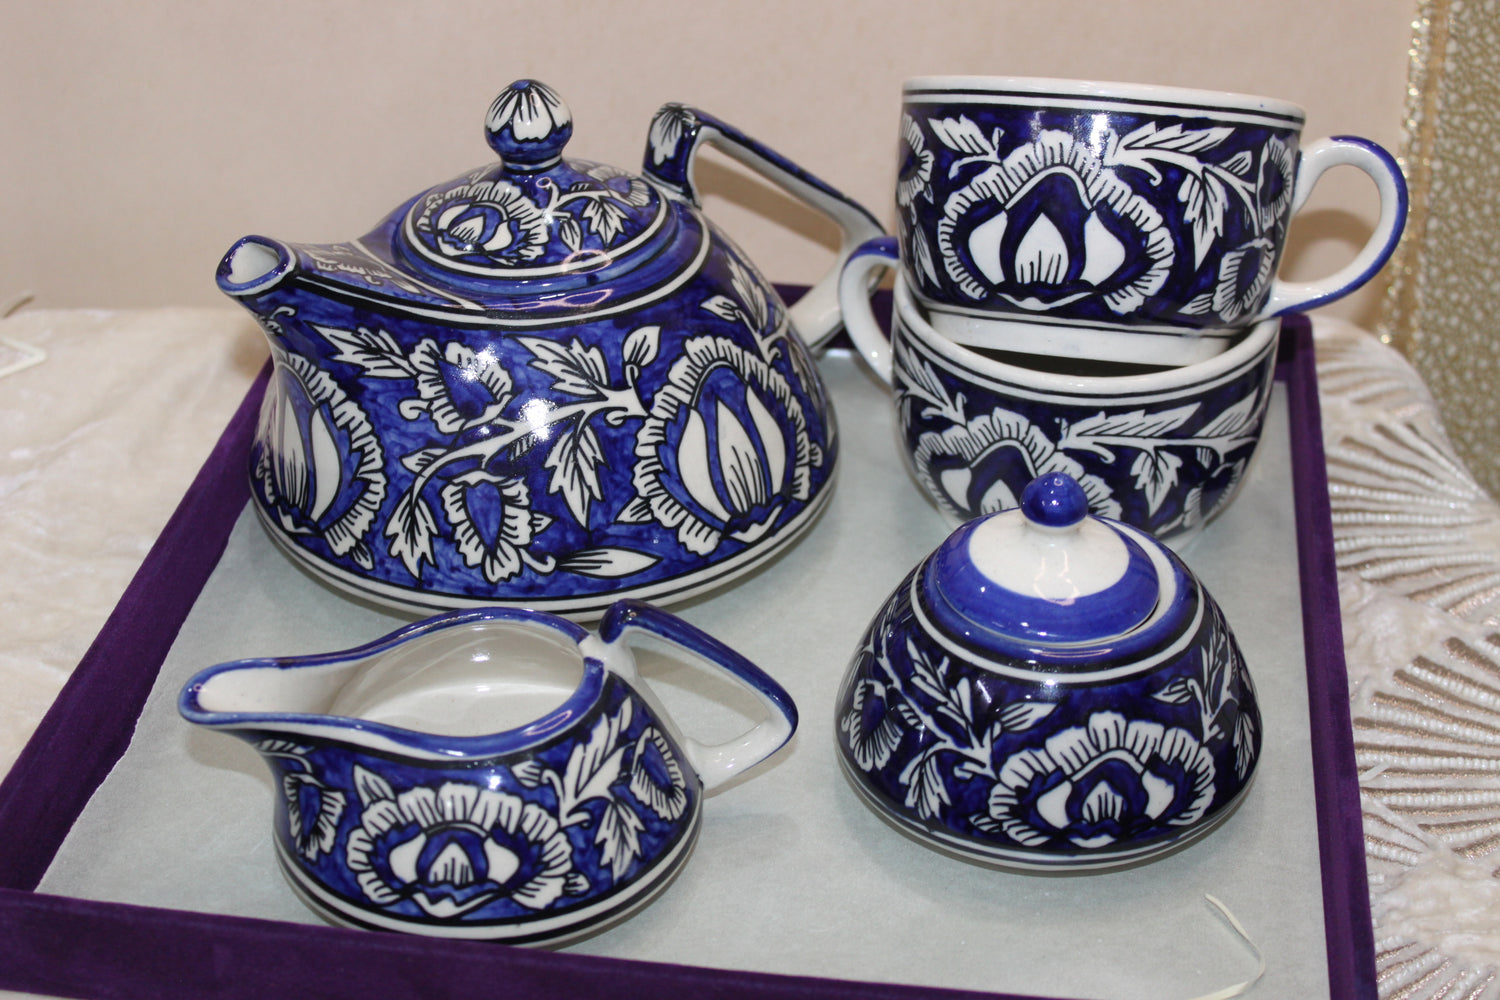 The Royal Jacobeans Tea set